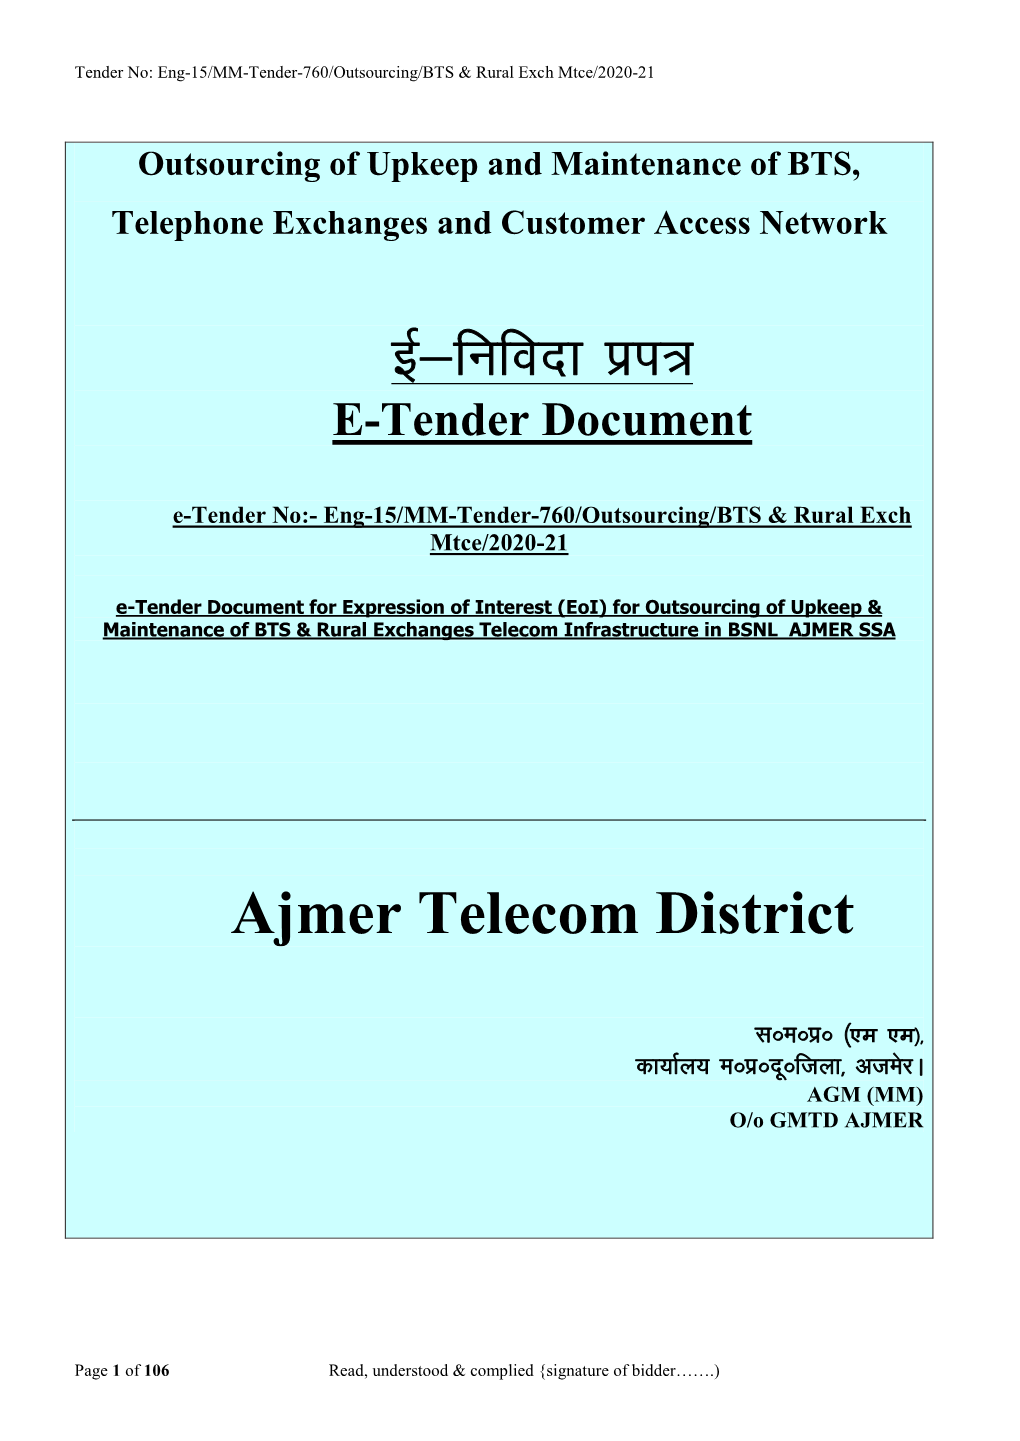 Bz&Fufonk Izi= Ajmer Telecom District